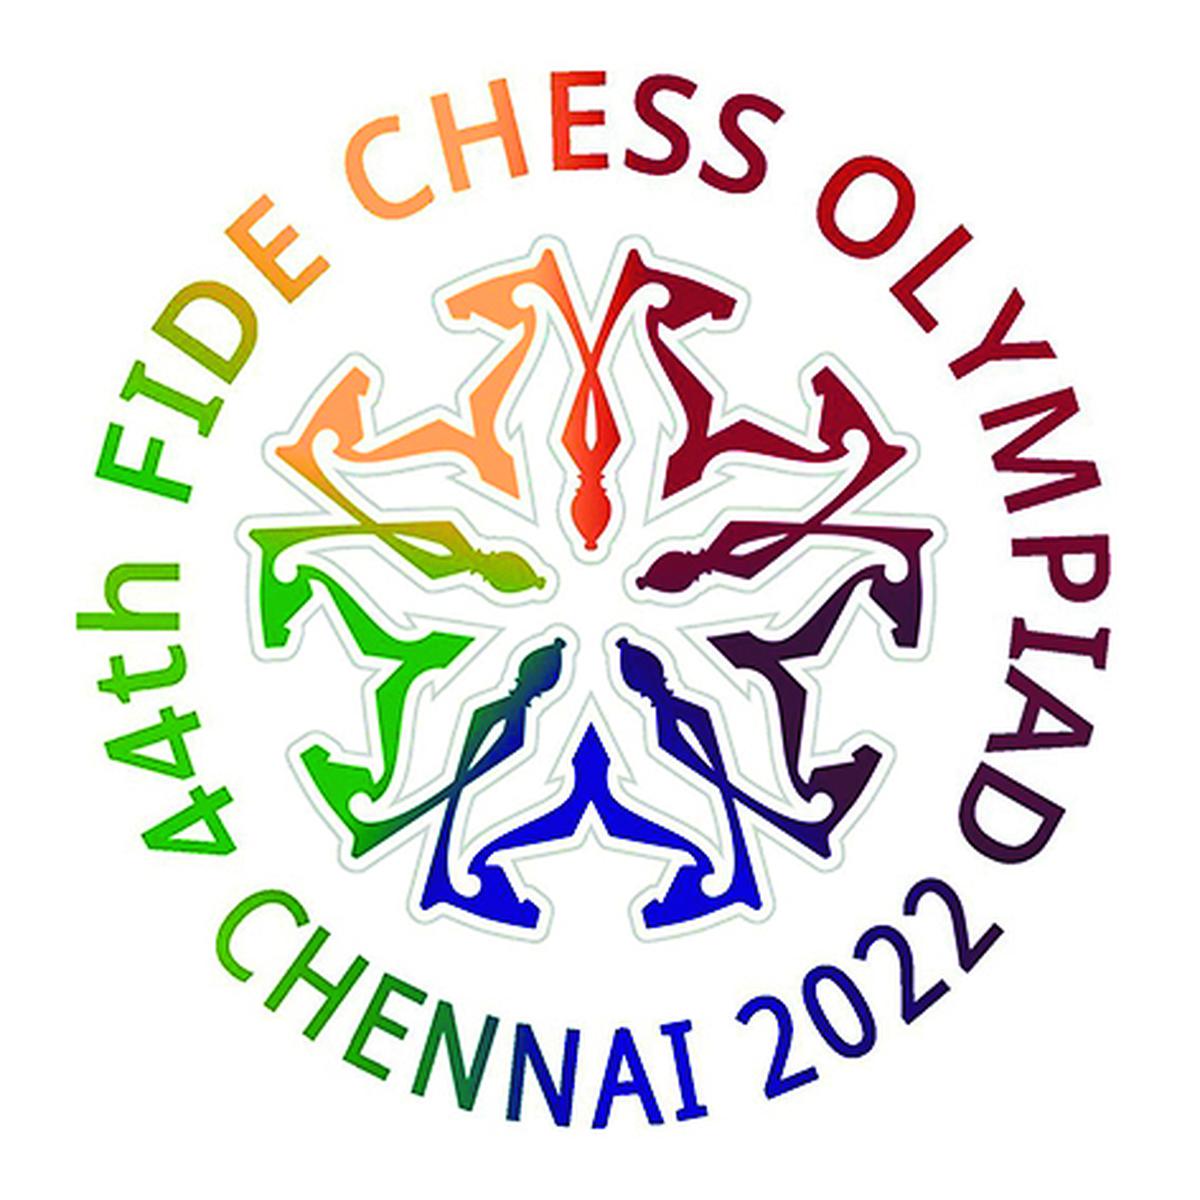 Chess Olympiad: Tamil Nadu CM MK Stalin inspects arrangements; Chennai Chess  Olympiad 2022, PM Modi Chennai visit